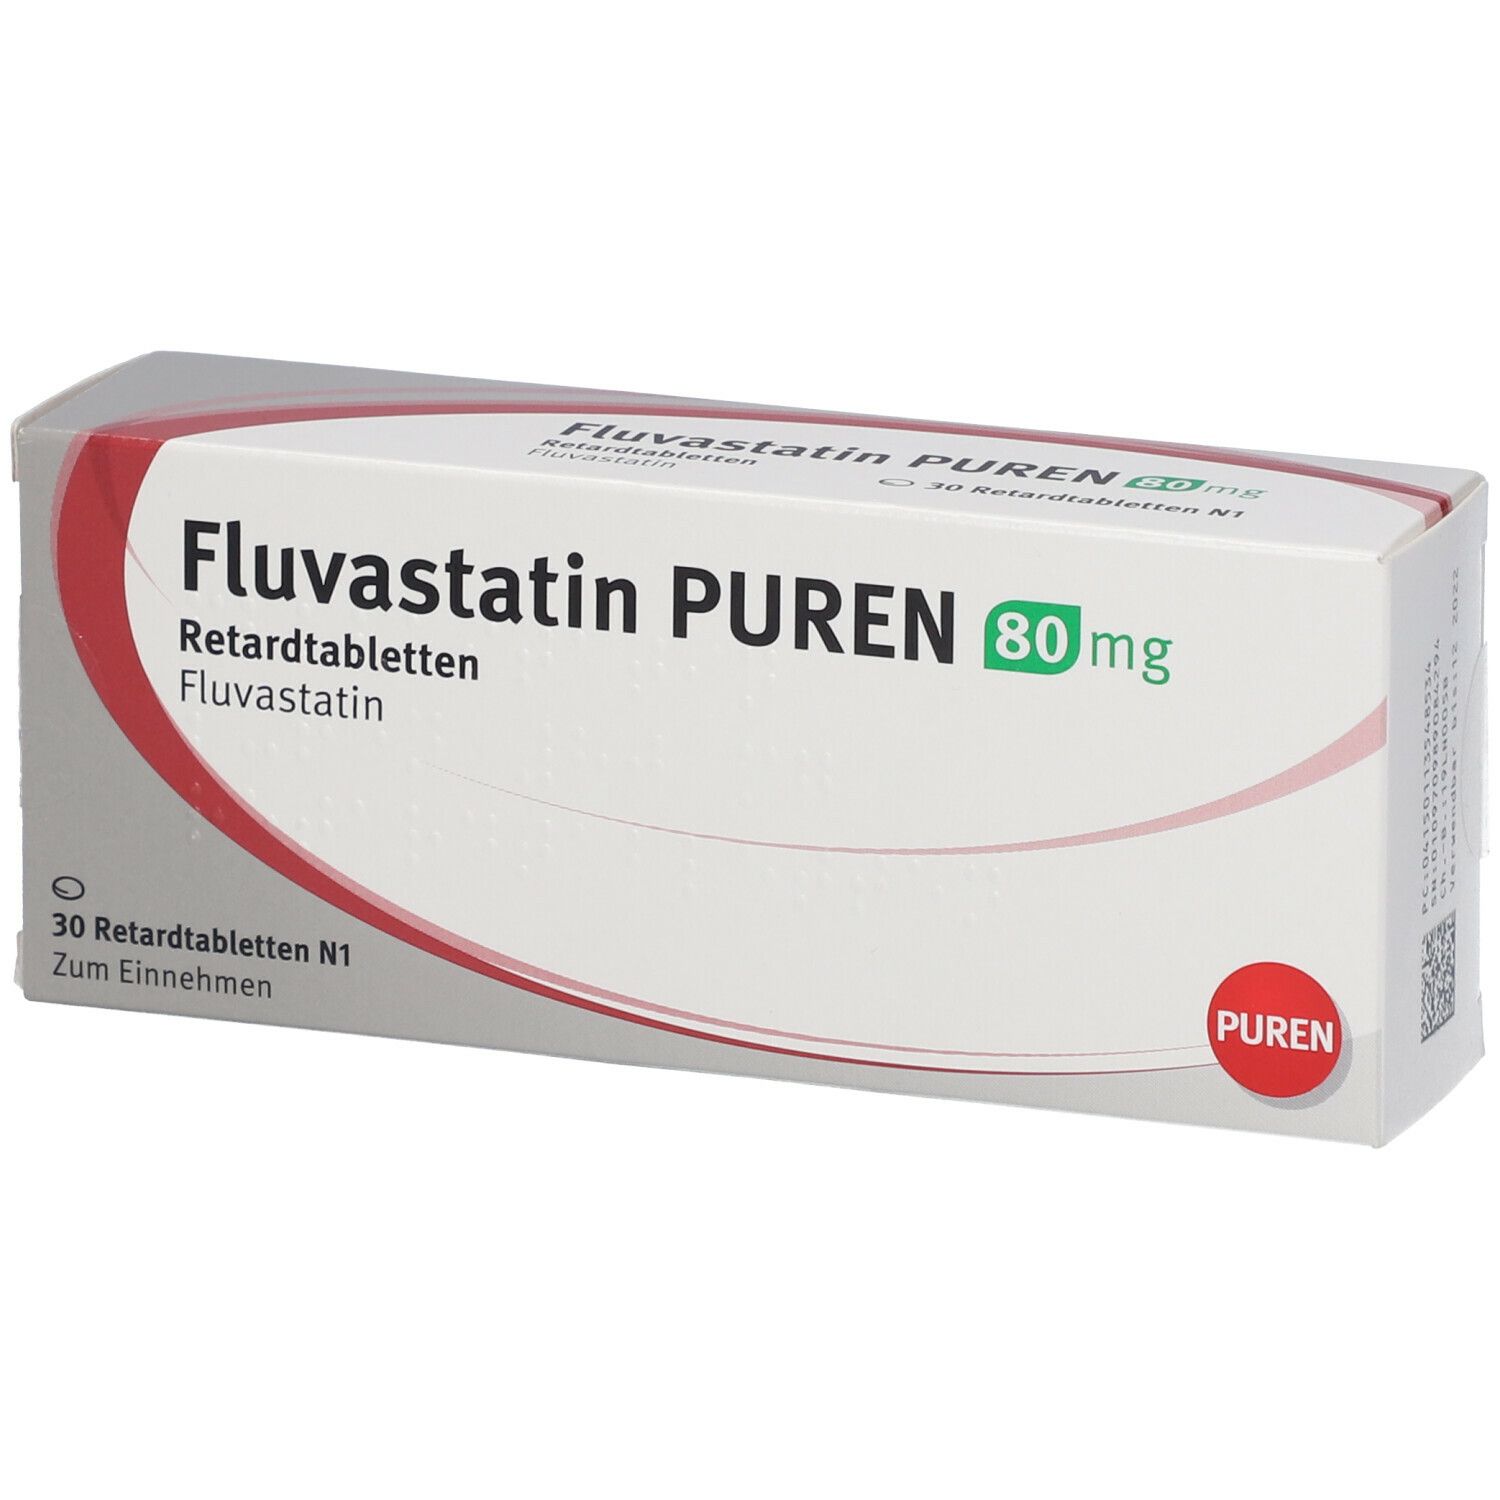 Fluvastatin PUREN 80 mg